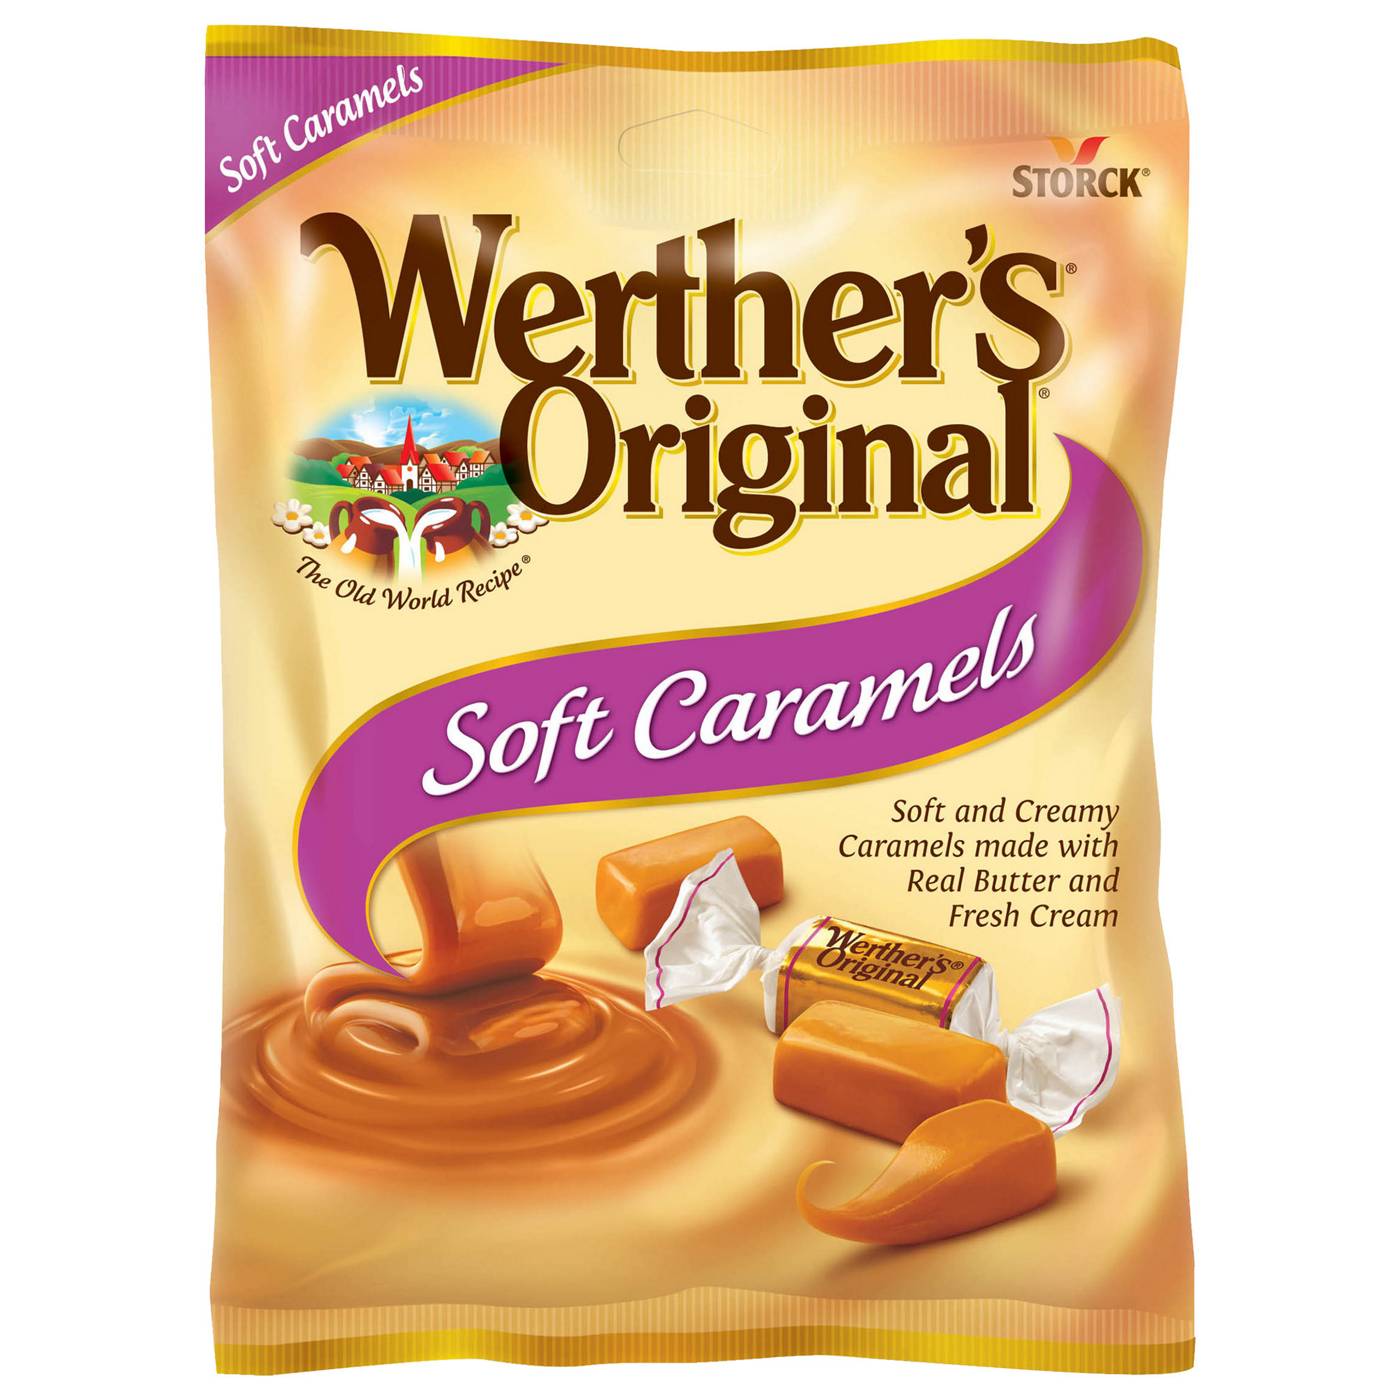 Werther's Original Soft Caramel Candy; image 1 of 6